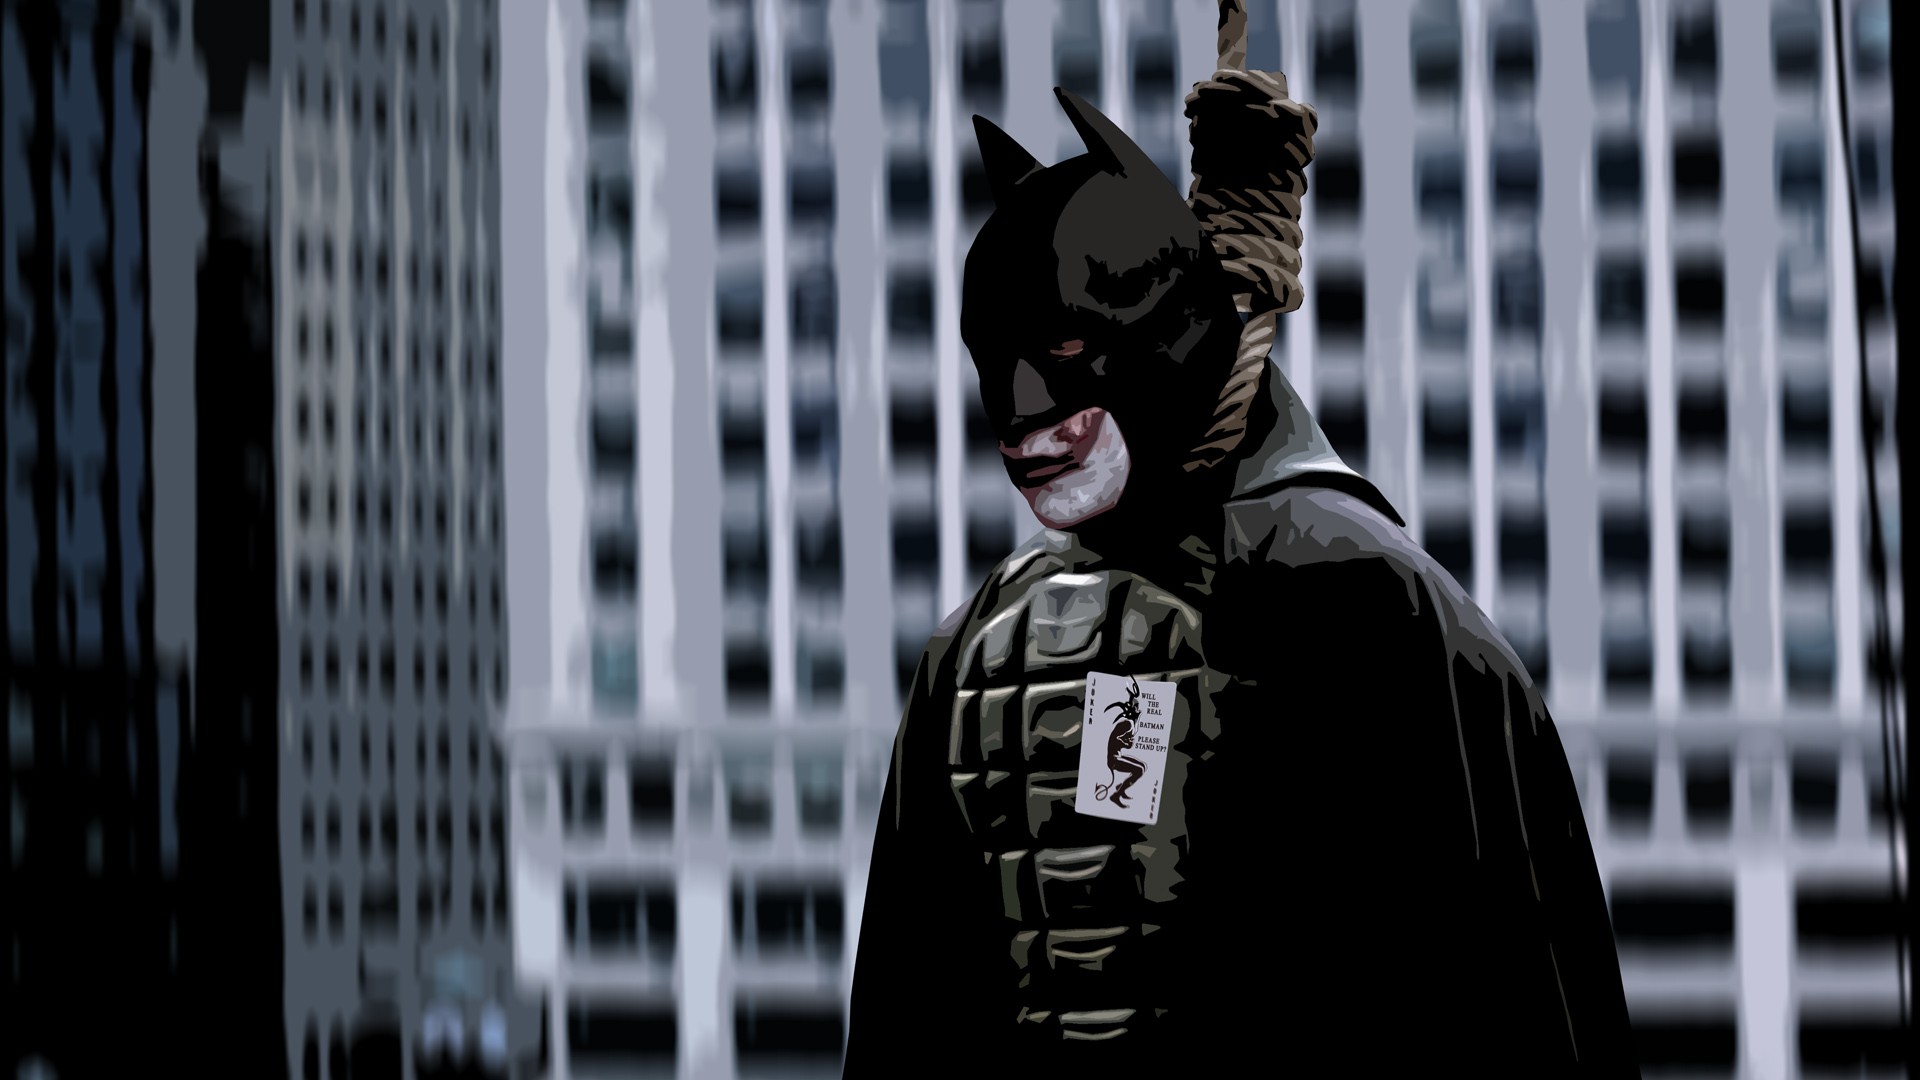 General 1920x1080 movies Batman The Dark Knight MessenjahMatt superhero DC Comics Warner Brothers Christopher Nolan